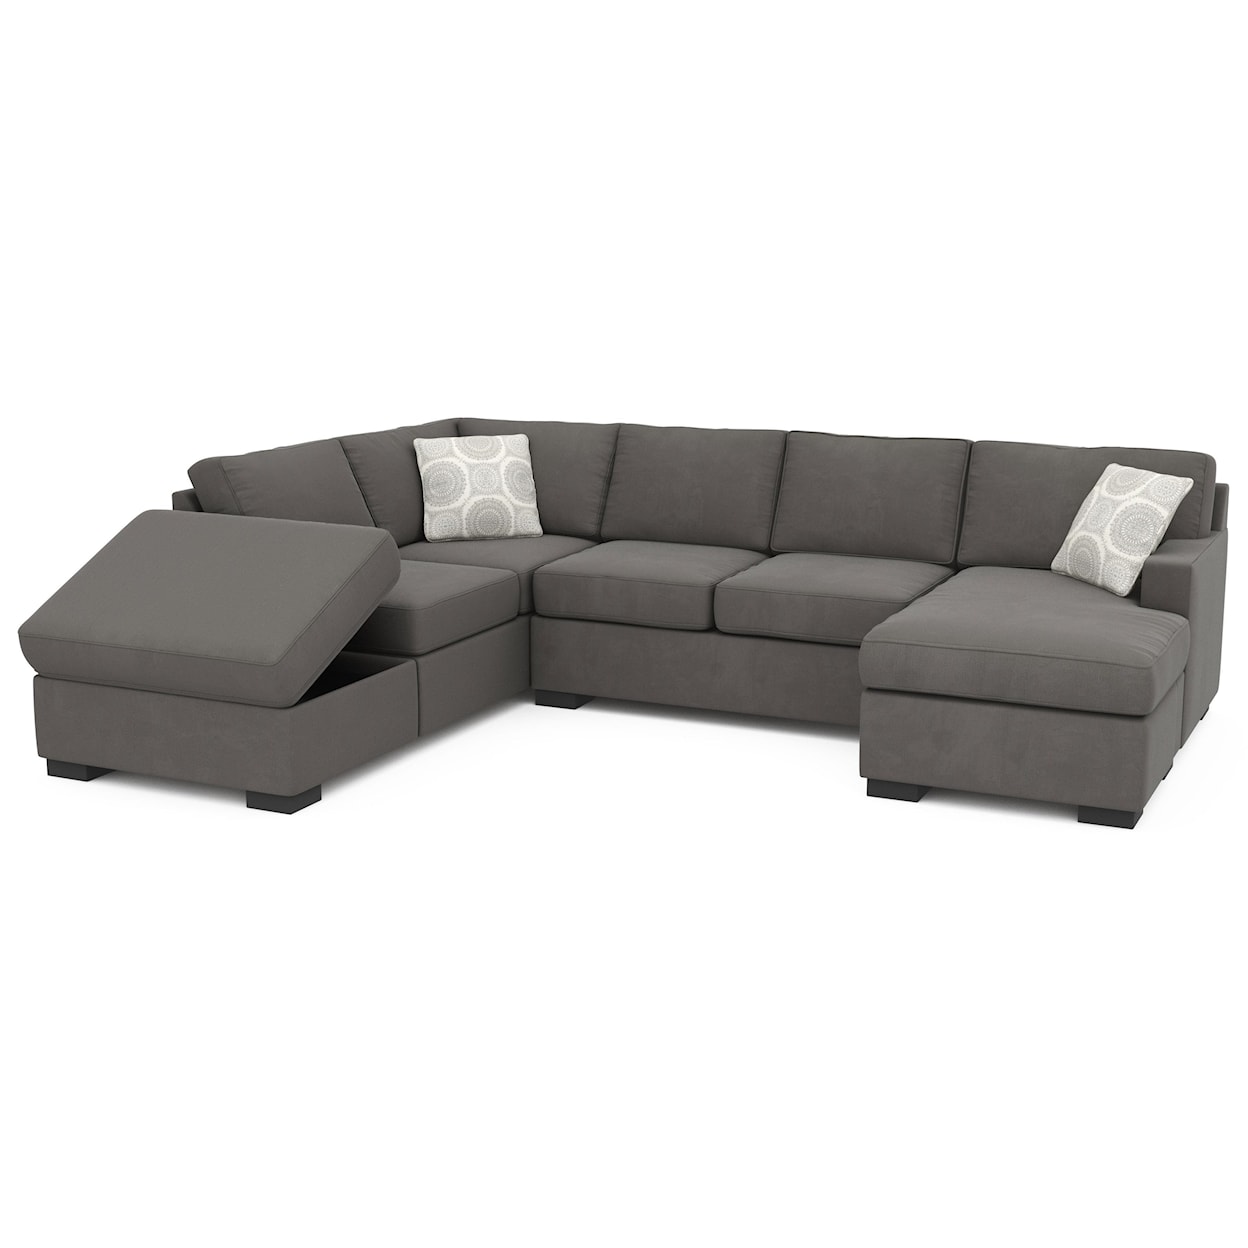 Stanton 146 Sectional Sofa